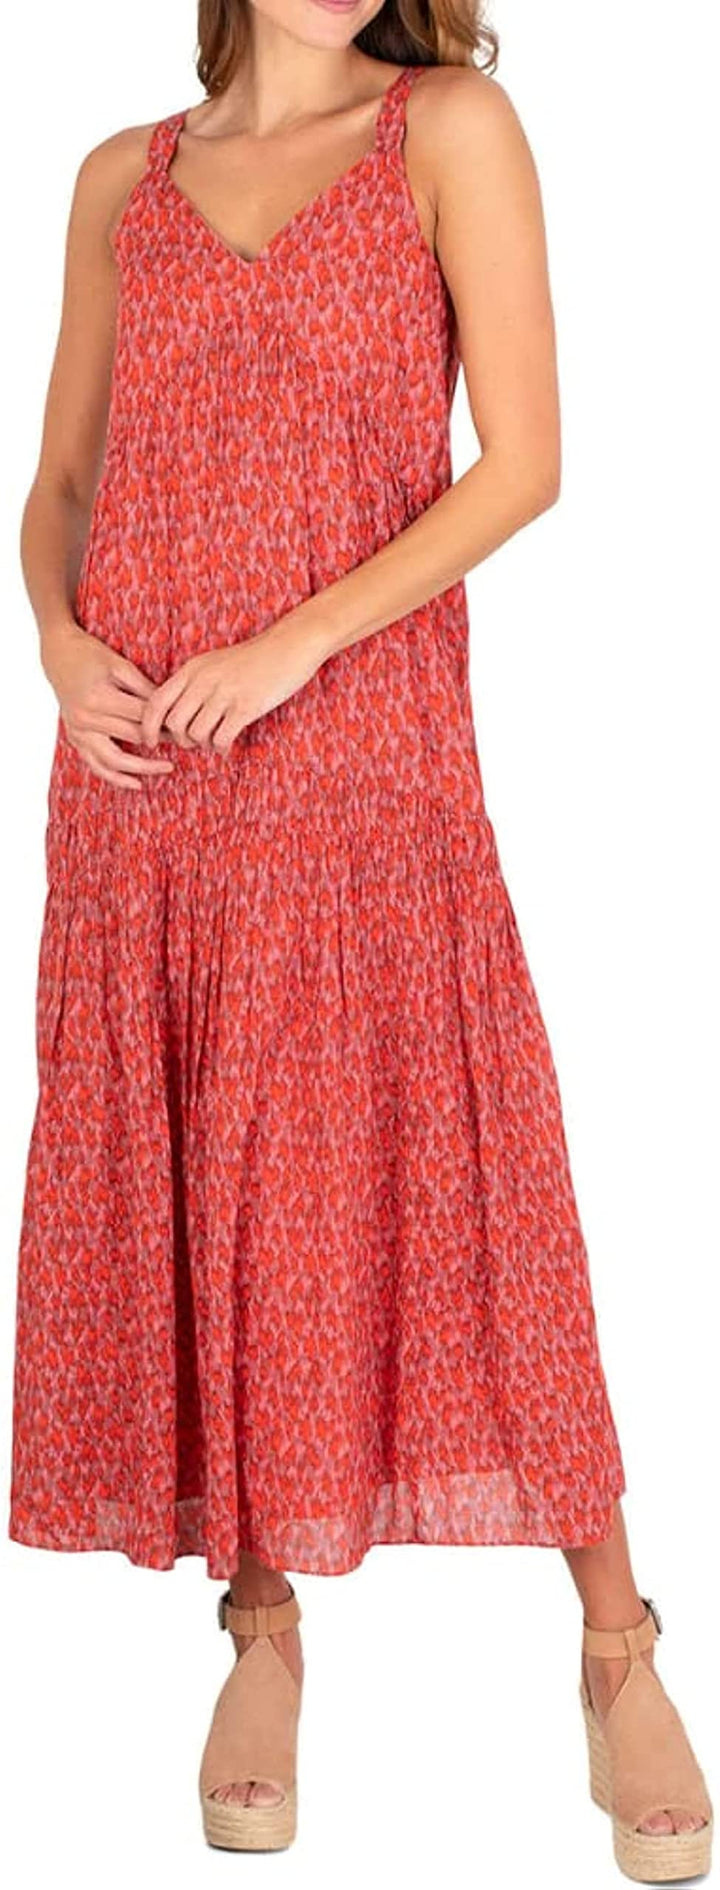 Joie Ladies' Limited Edition Maxi Dress (XL, Tea Rose)